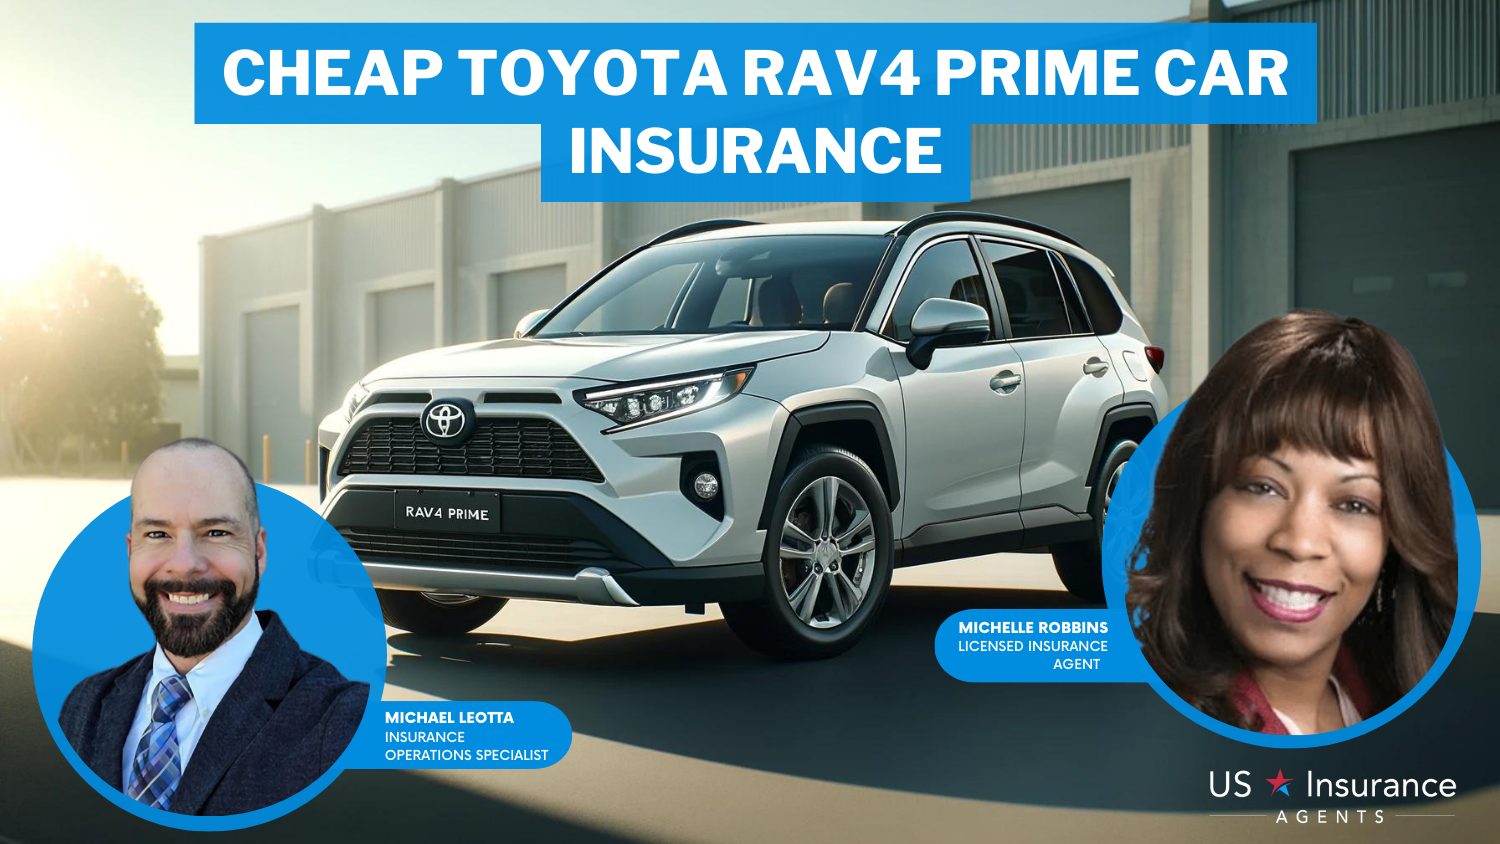 Cheap Toyota RAV4 Prime Car Insurance: Safeco, Erie, and USAA